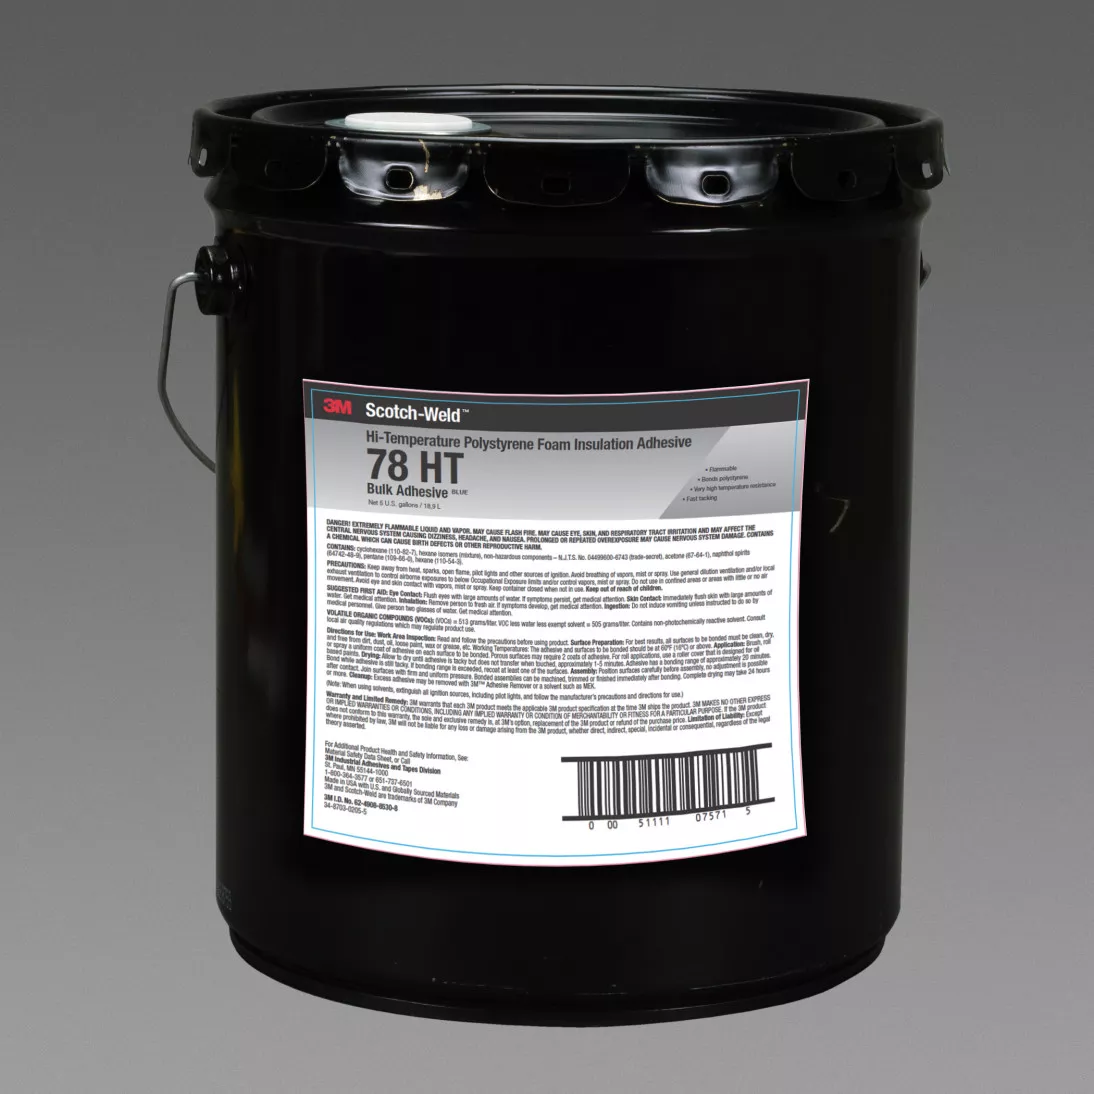 3M™ Hi-Temperature Polystyrene Insulation Adhesive 78HT, Blue, 5 Gallon
Drum (Pail)